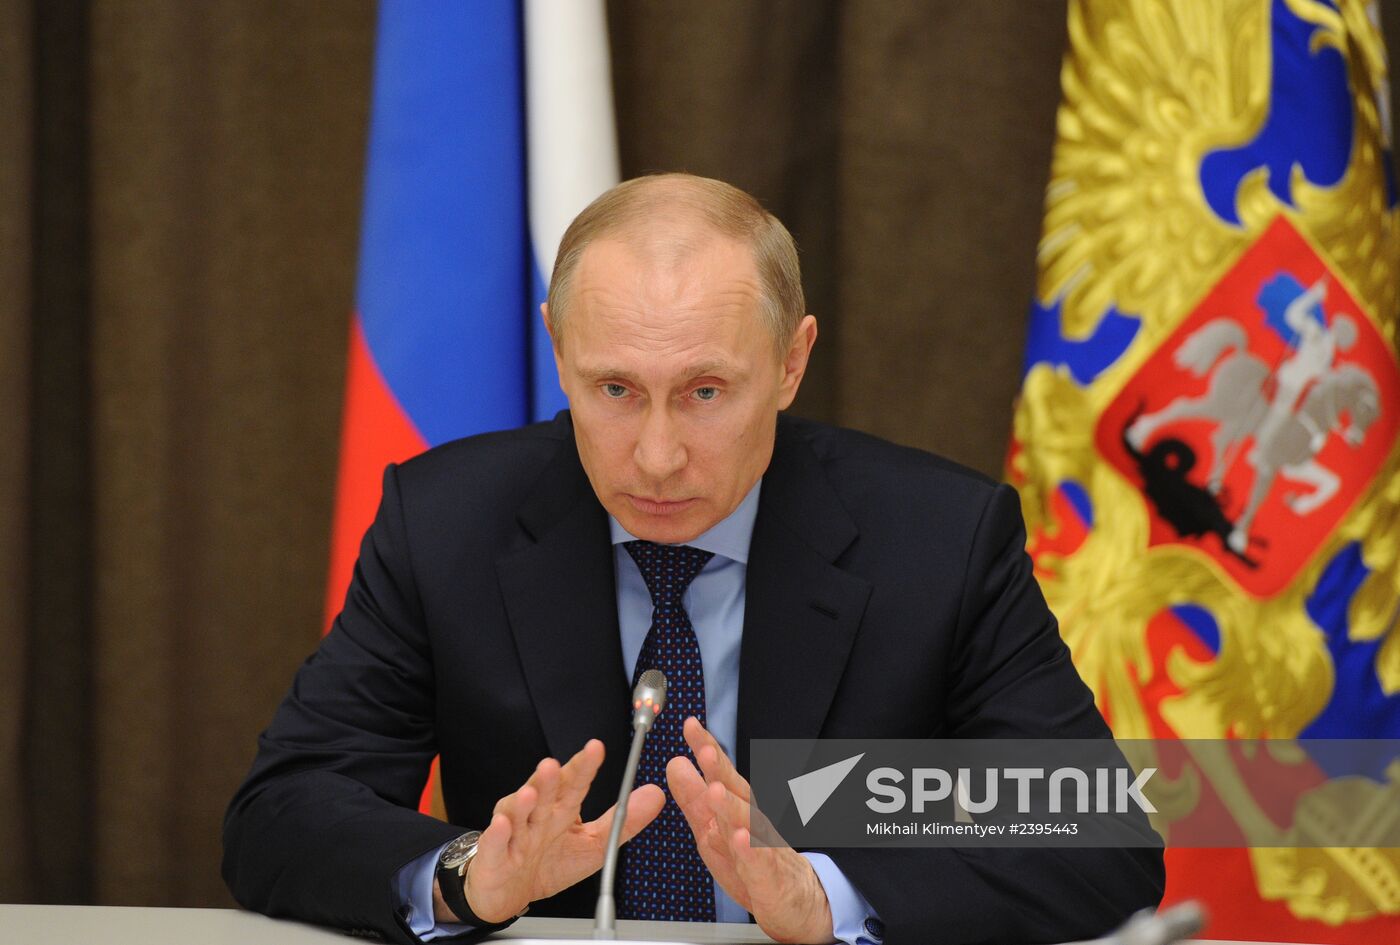 Vladimir Putin chairs meeting on economic issues